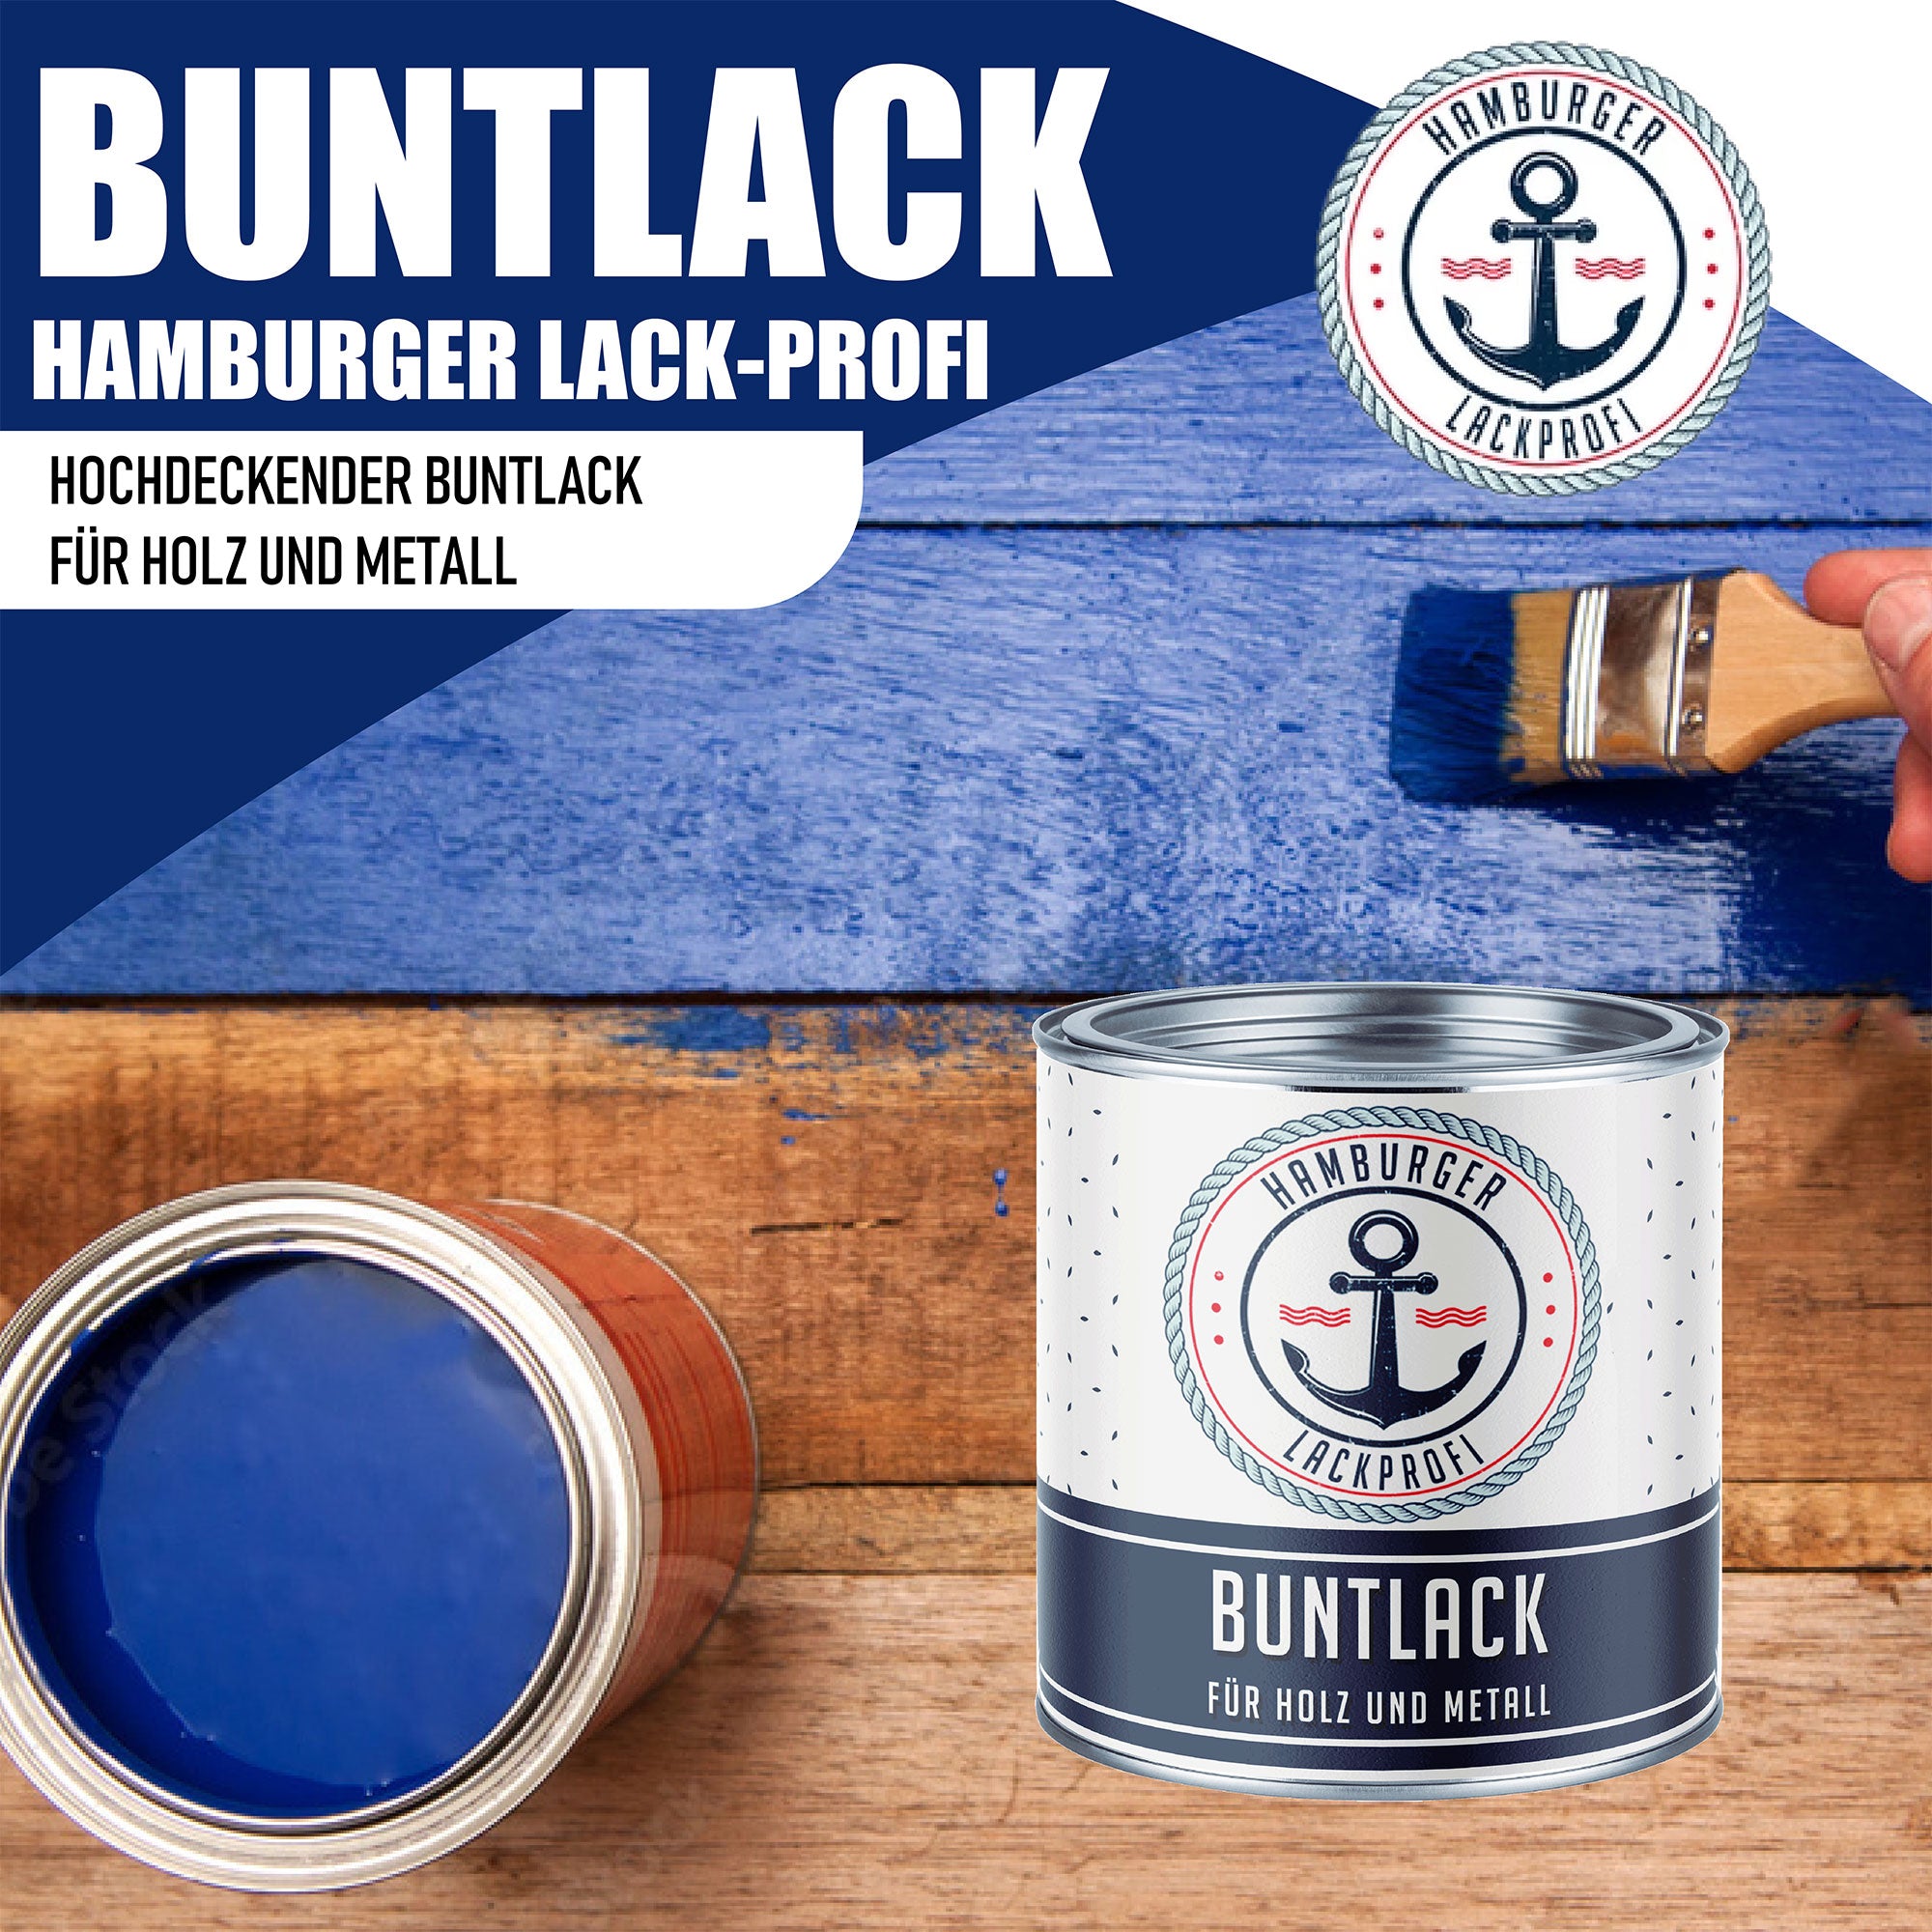 Hamburger Lack-Profi Buntlack Blutorange RAL 2002 - Robuster Kunstharzlack